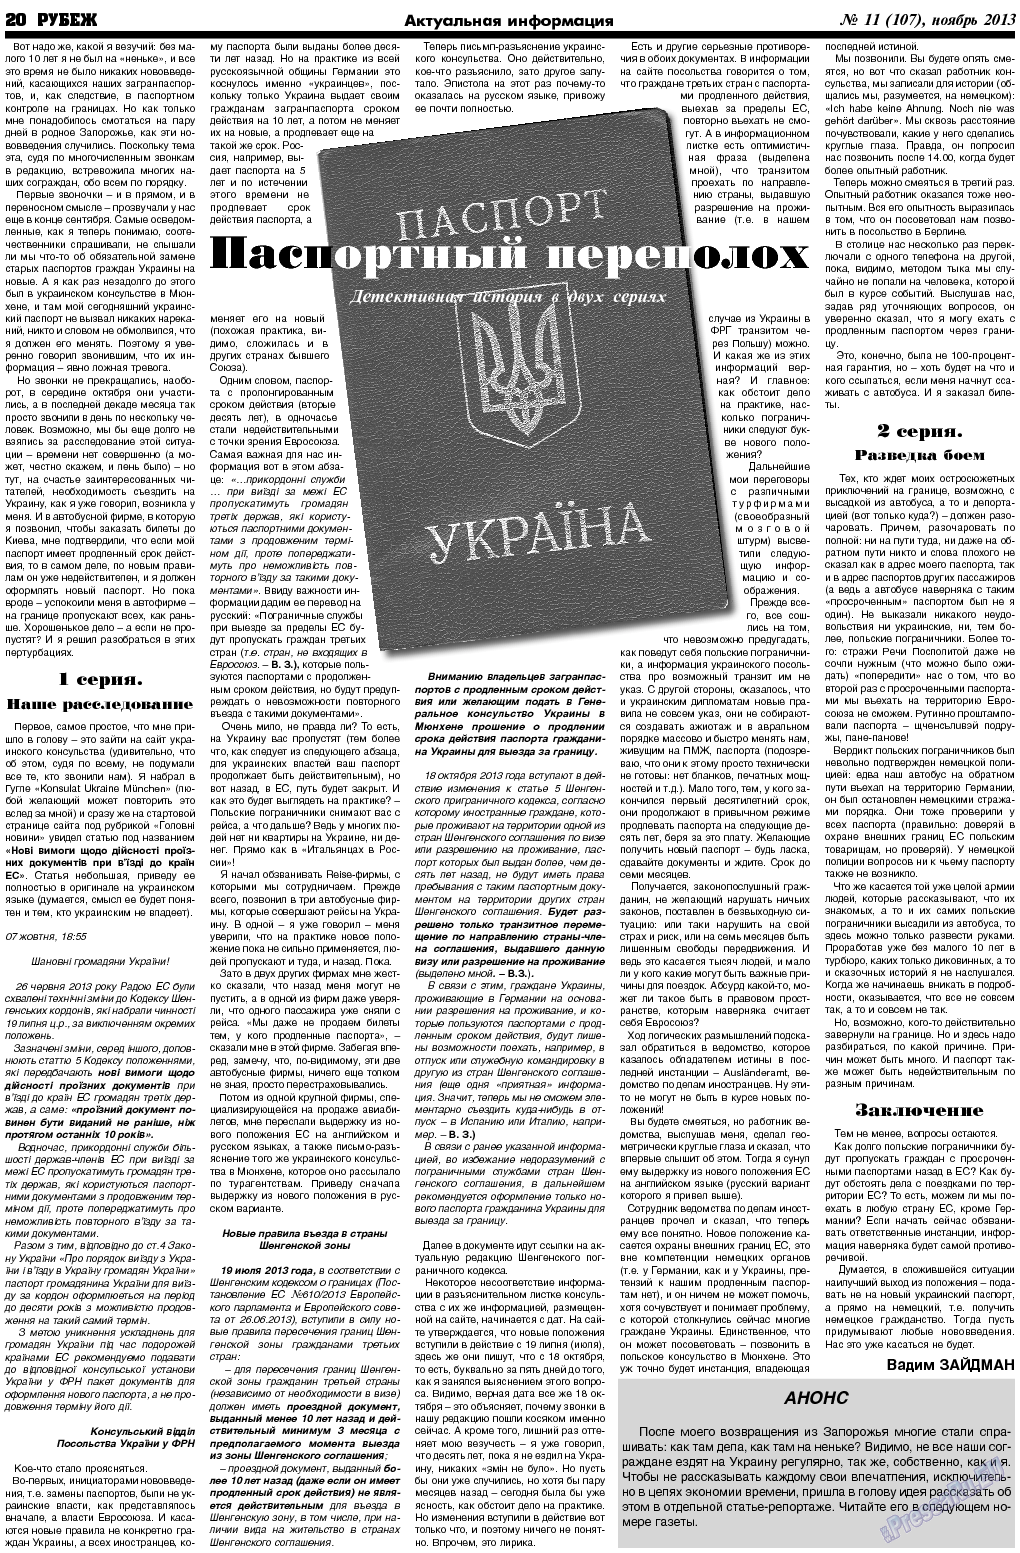 Рубеж, газета. 2013 №11 стр.20